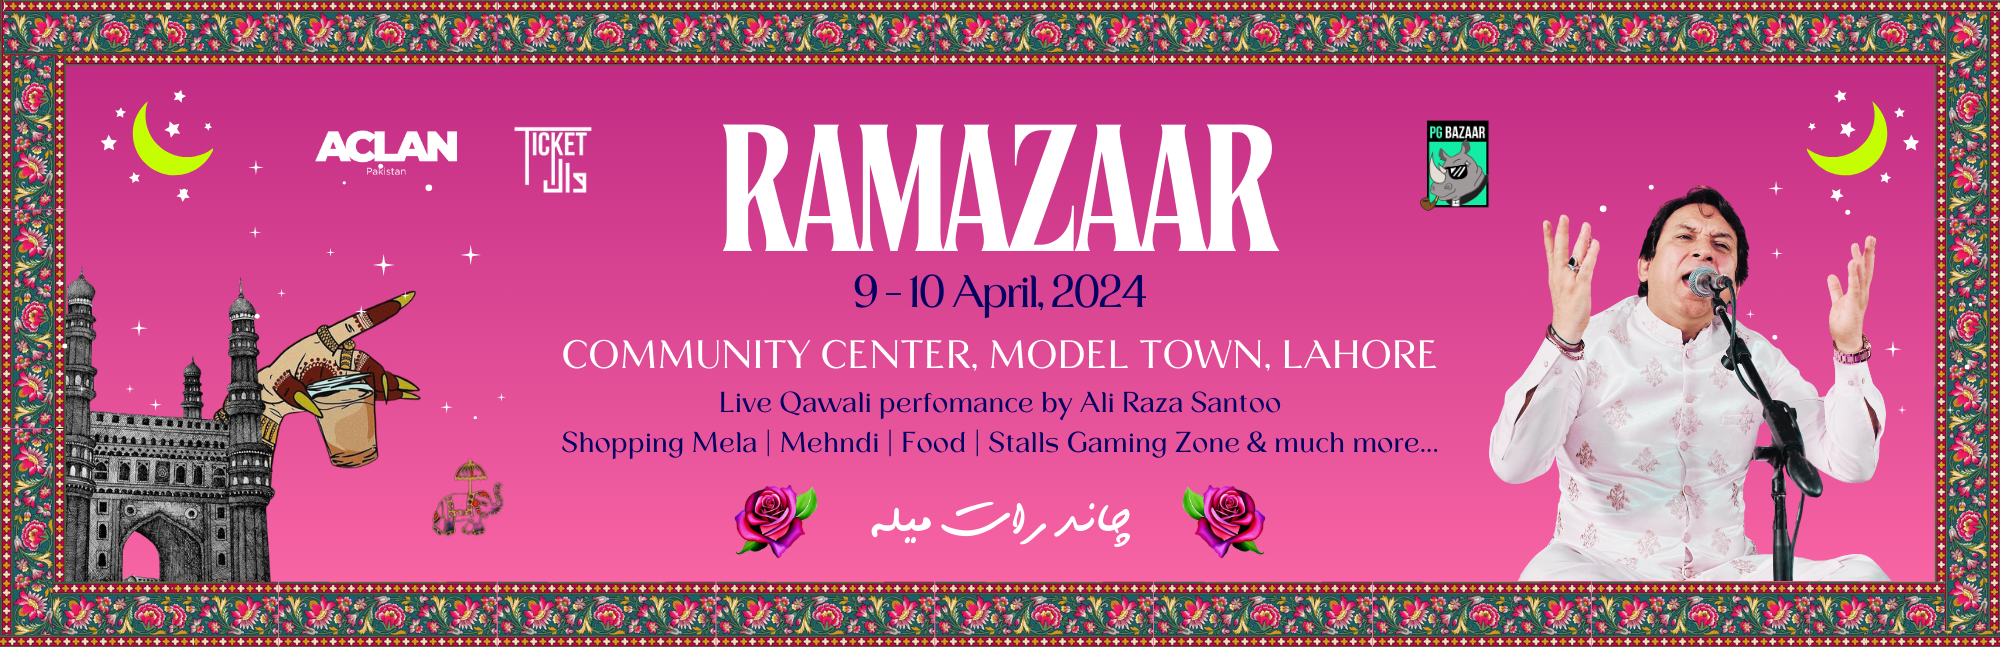 Ramazaar 2.0 - Chand raat - Santoo’s Qawali - Experiential event